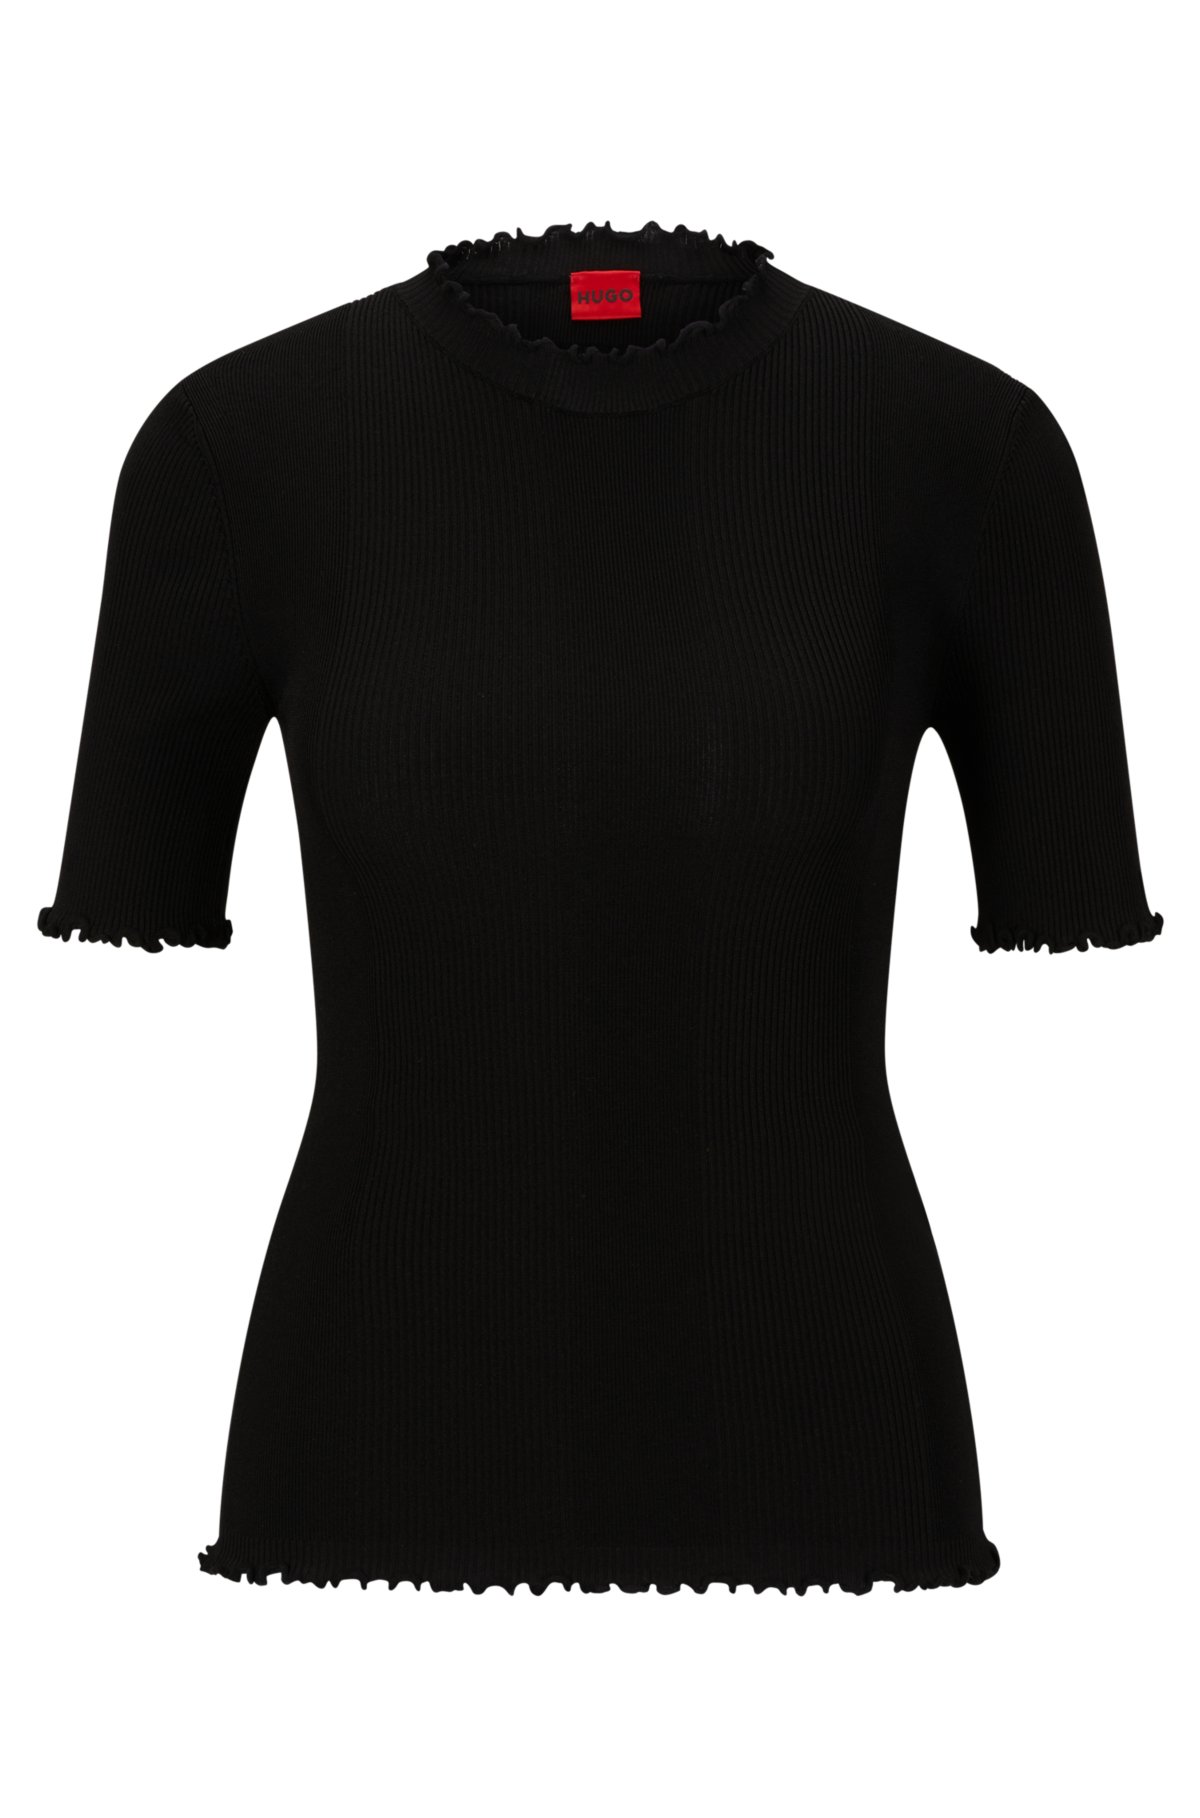 Fashion UNISEX Corporate Quality Black Turtle Neck Top/ Cooperate Black